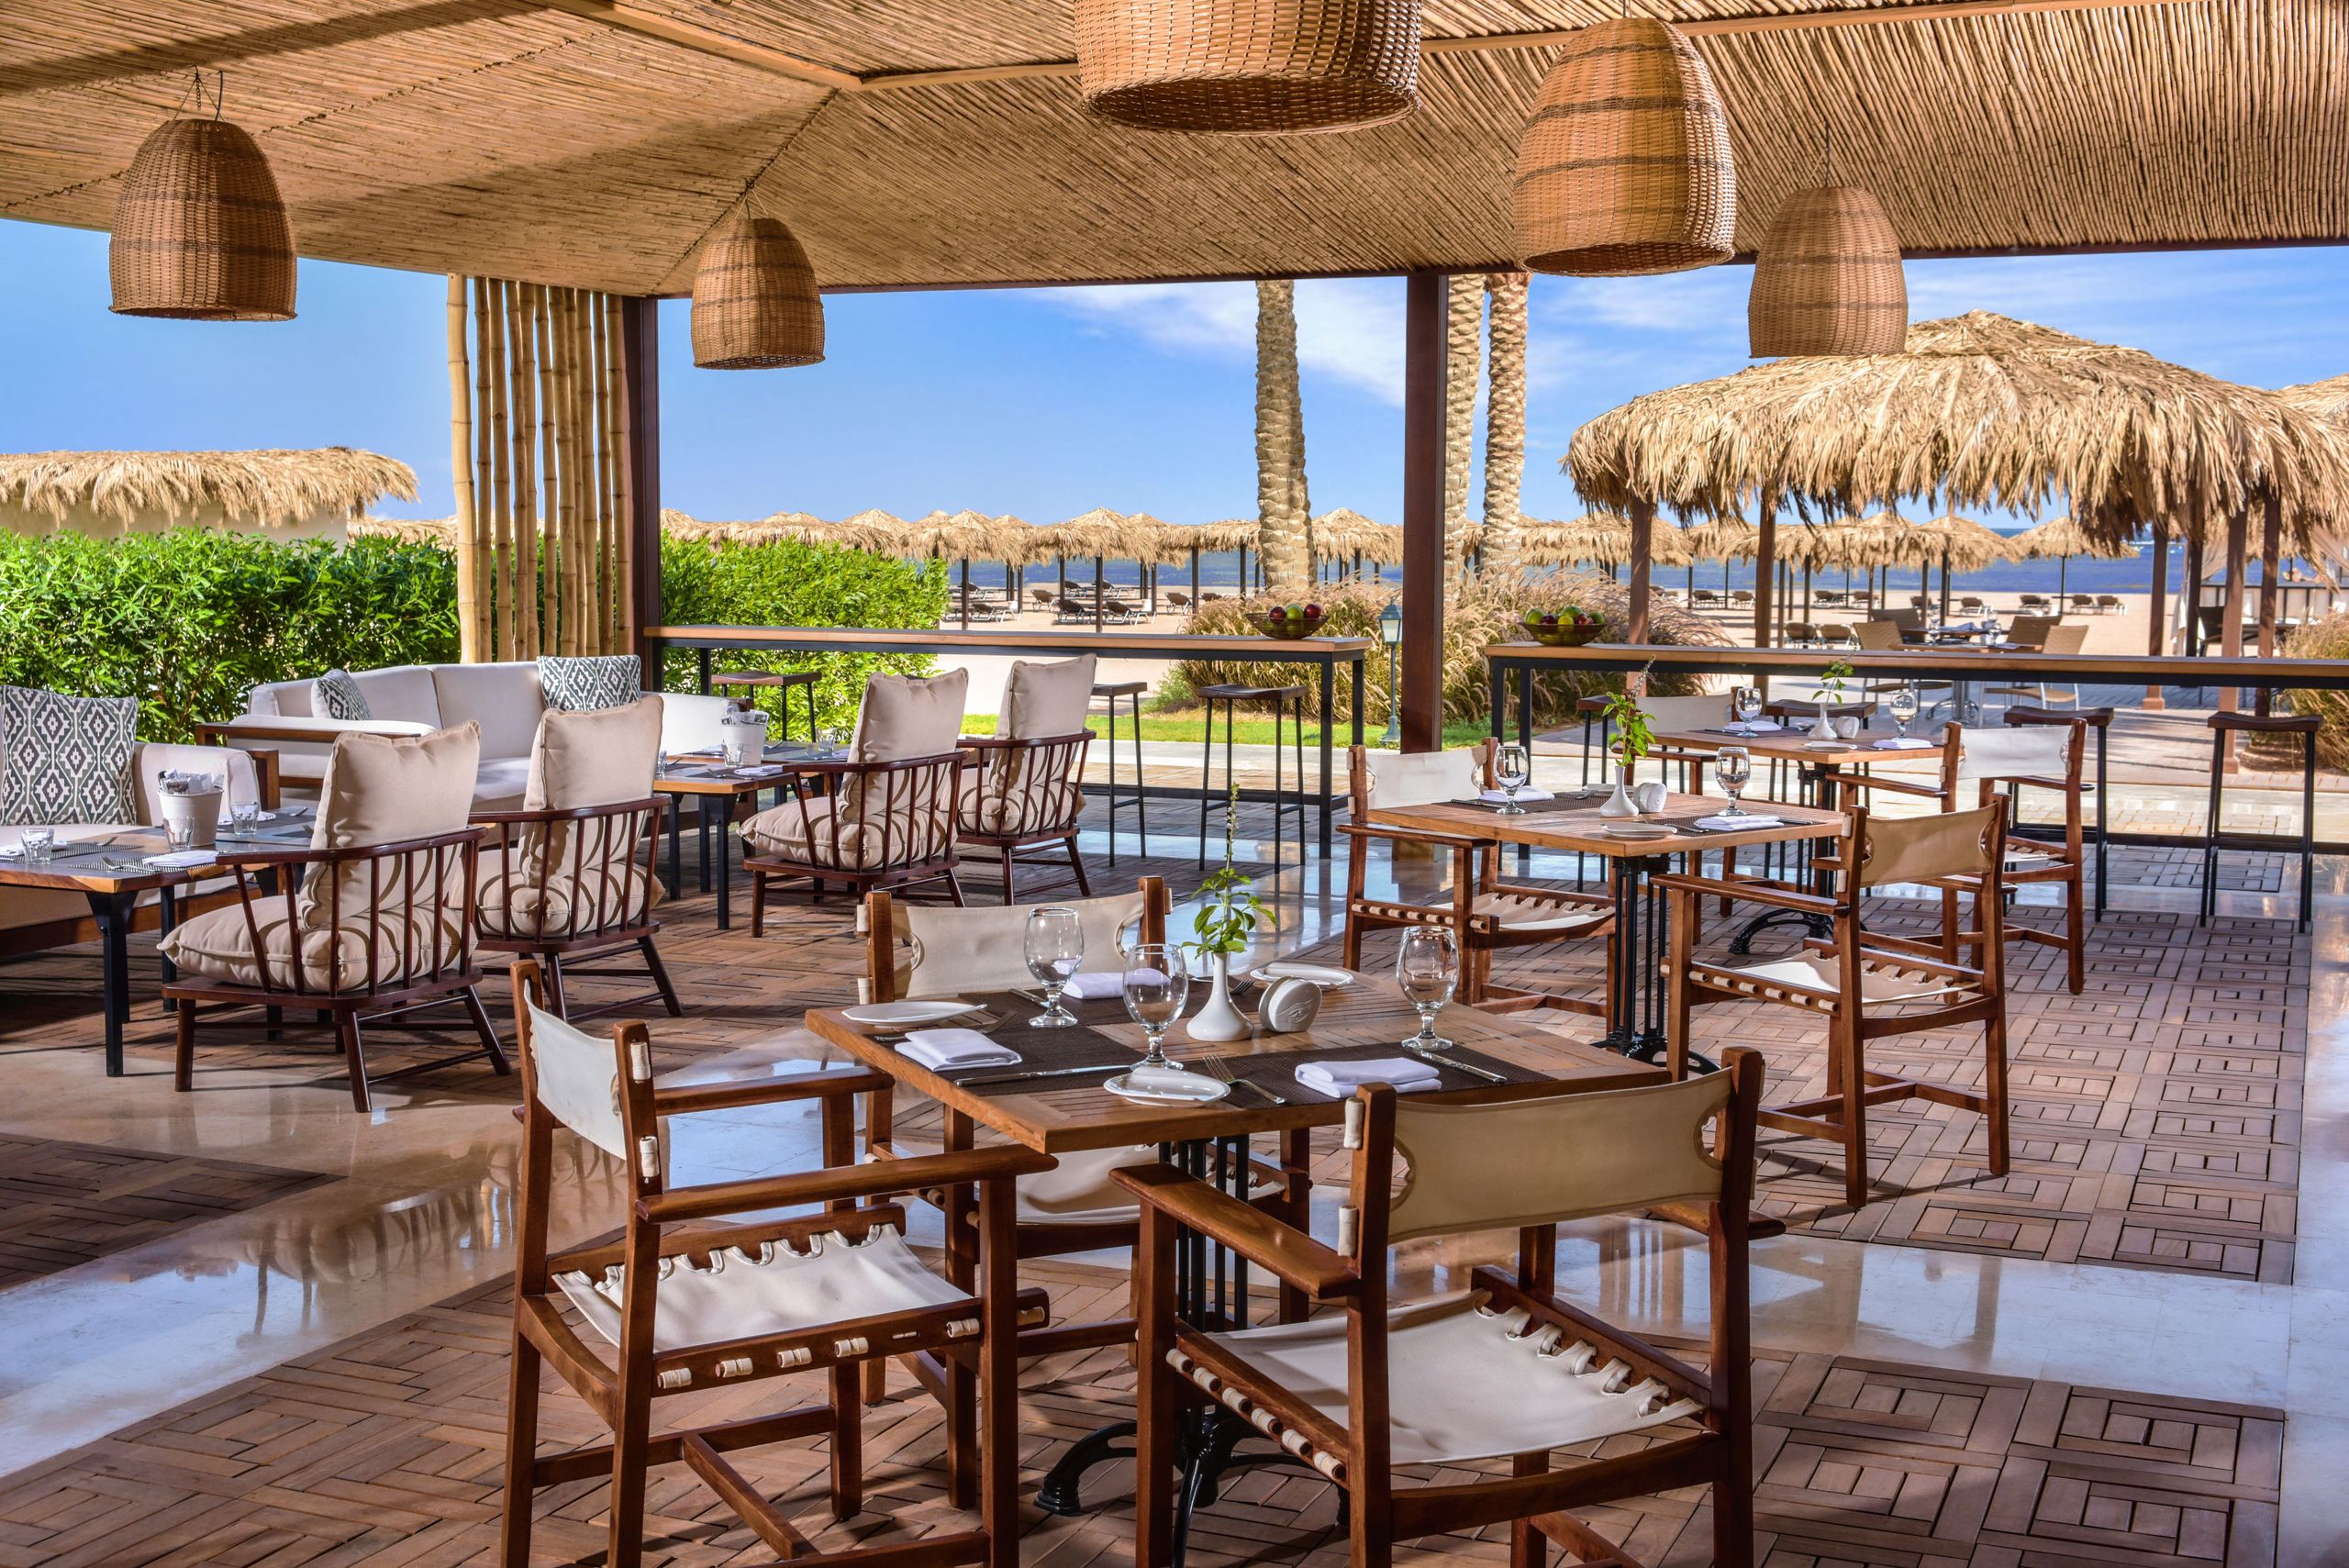 Steigenberger Alcazar - Sharm El Sheikh - Egypt - Sanafir Restaurant and Beach Bar